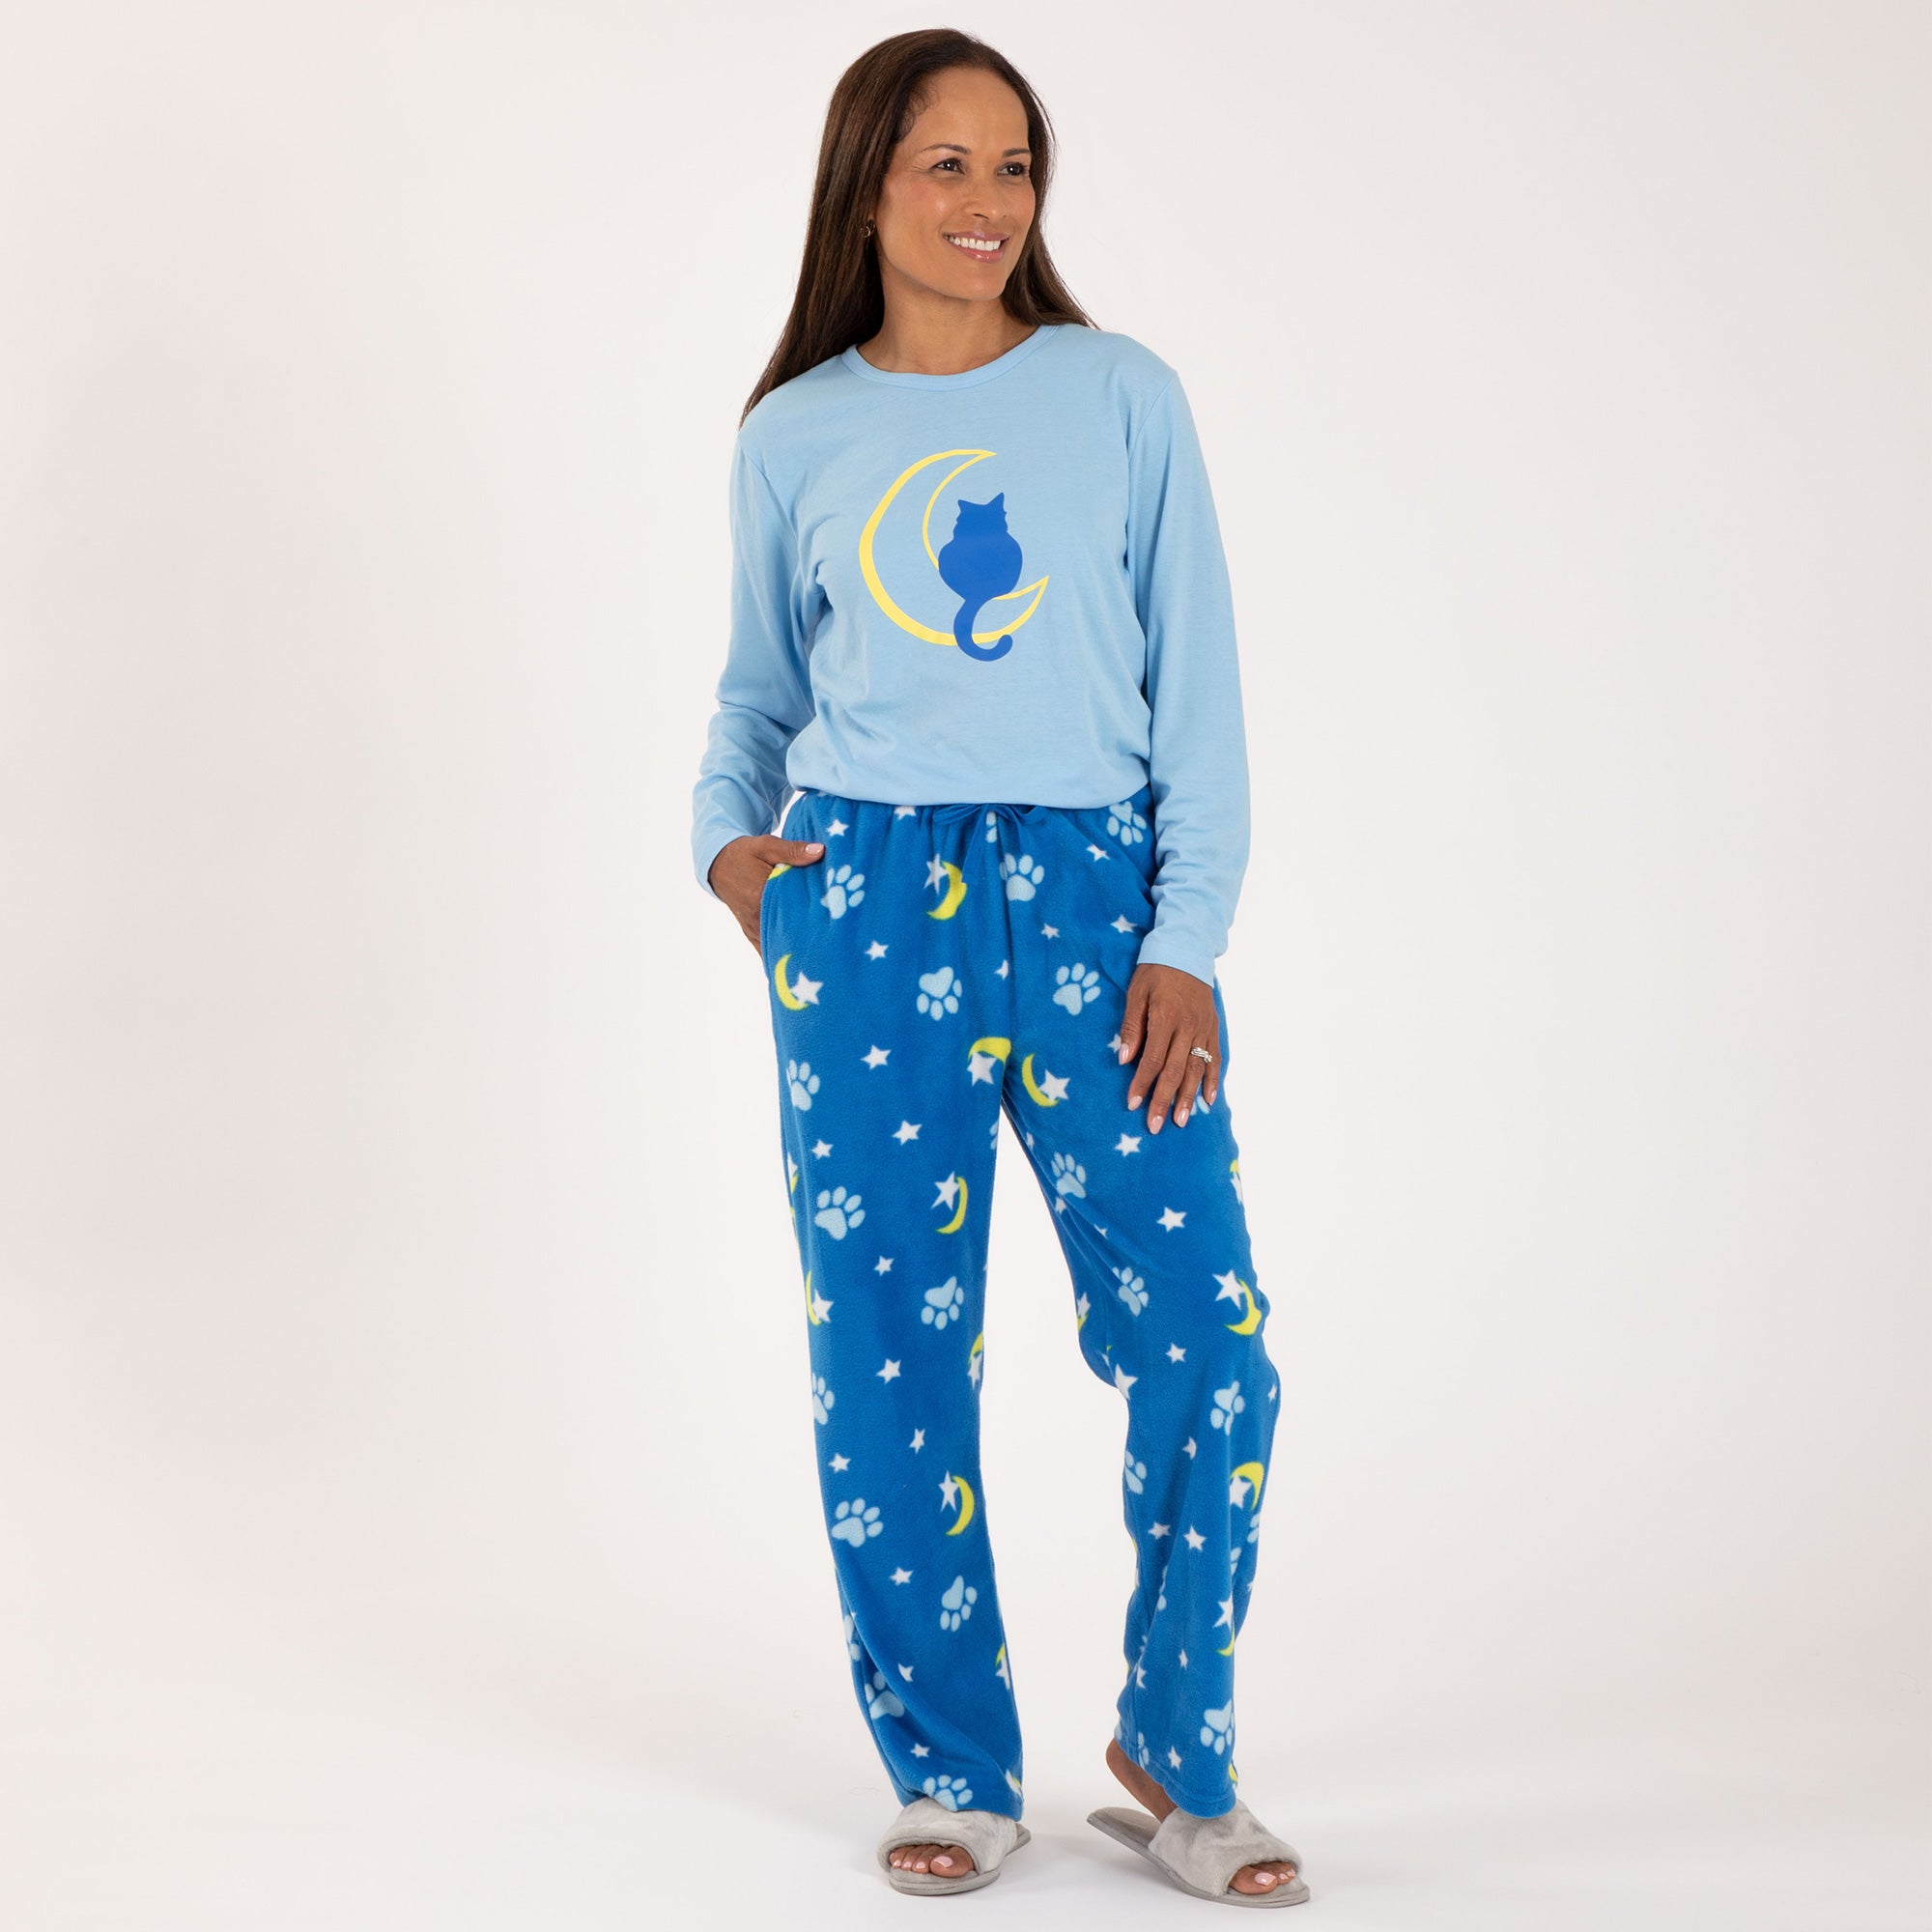 Star & Moon Paws Pajama Set - Dog - 2X